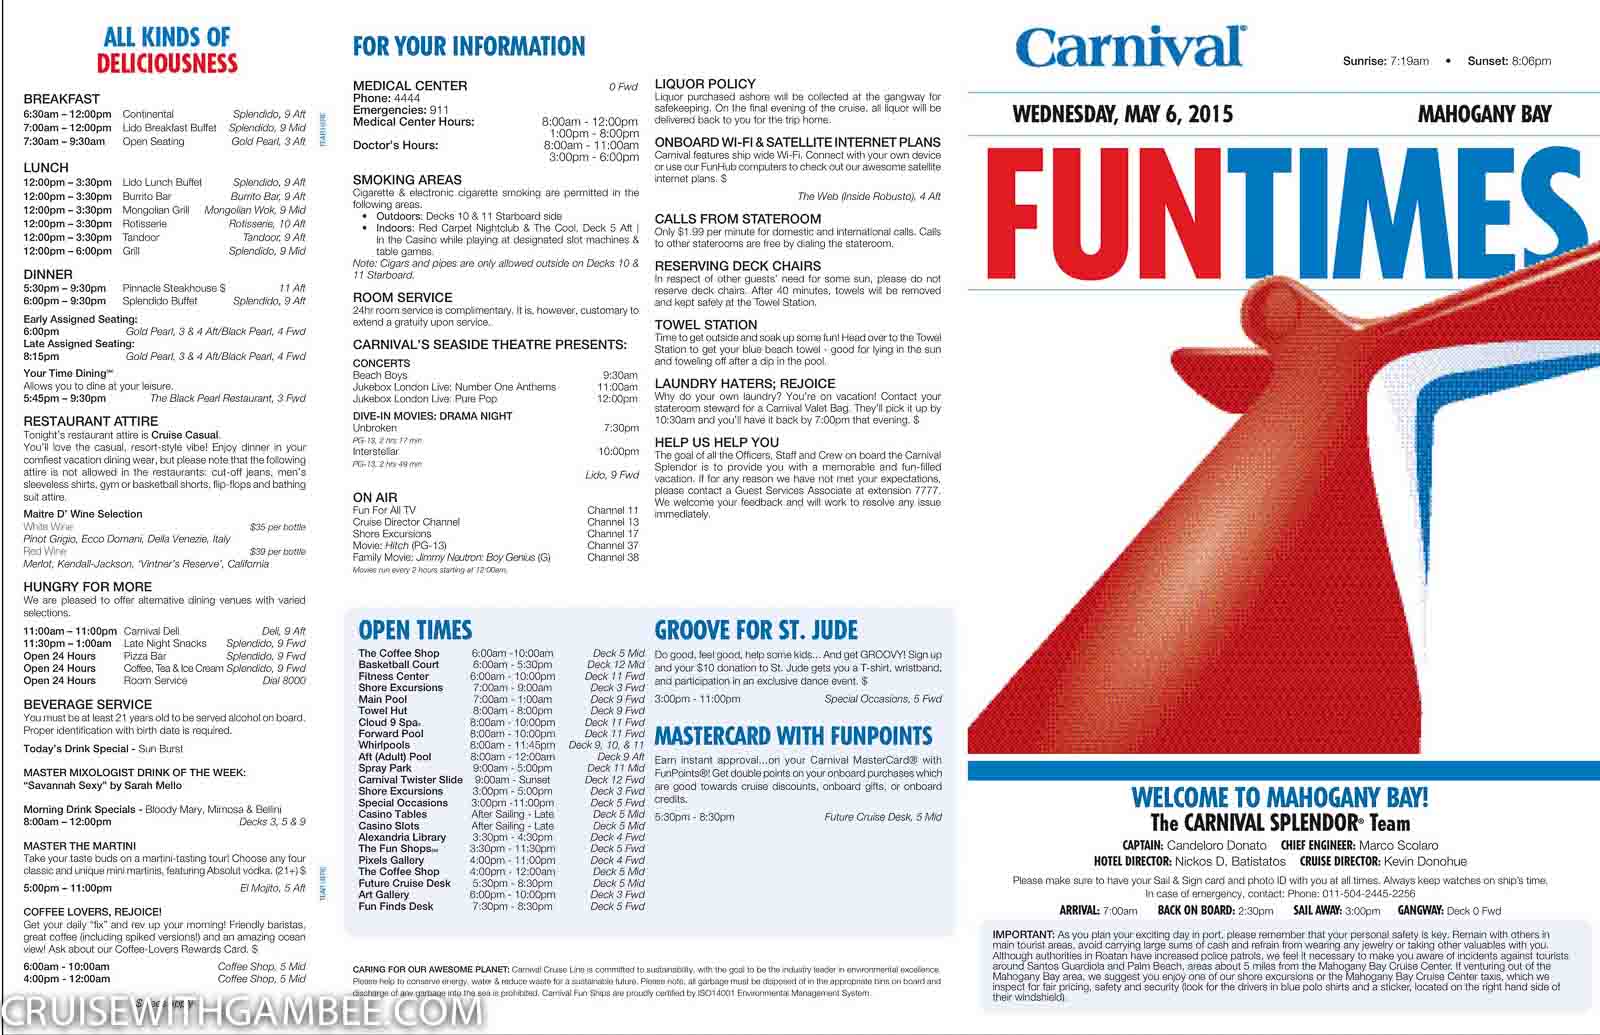 Carnival Splendor Funtimes-8